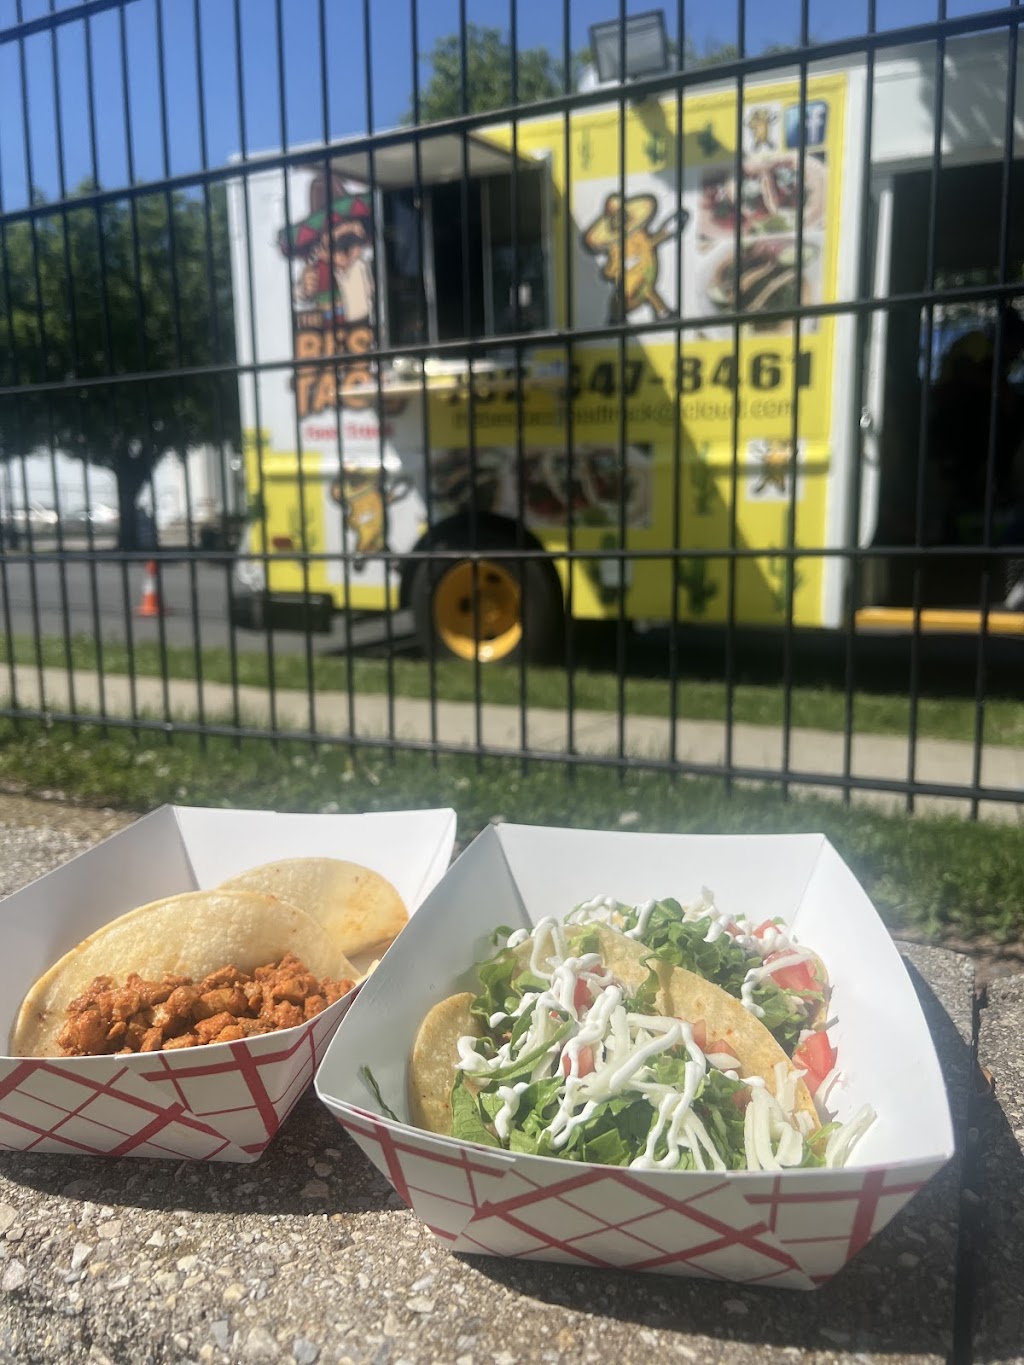 The Best Taco Food Truck | restaurant | 339 Reade St, Perth Amboy, NJ 08861, USA | 7326478461 OR +1 732-647-8461